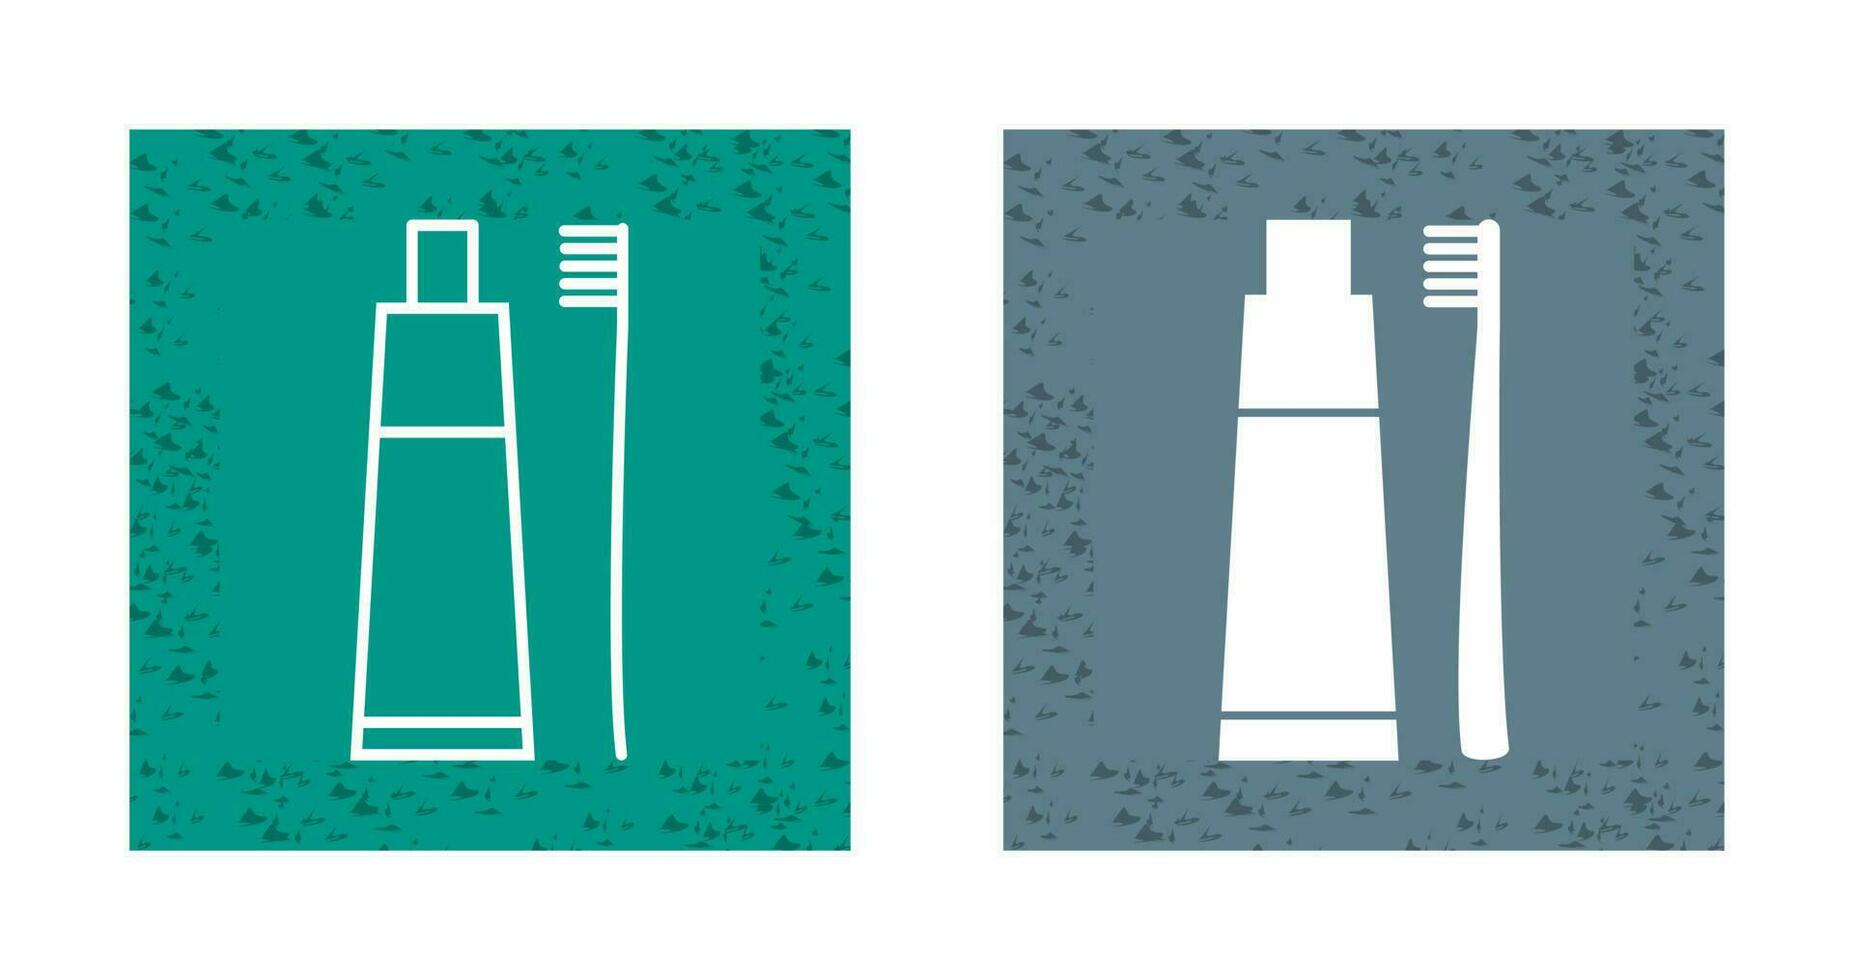 Vektorsymbol für Zahnbürste und Zahnpasta vektor